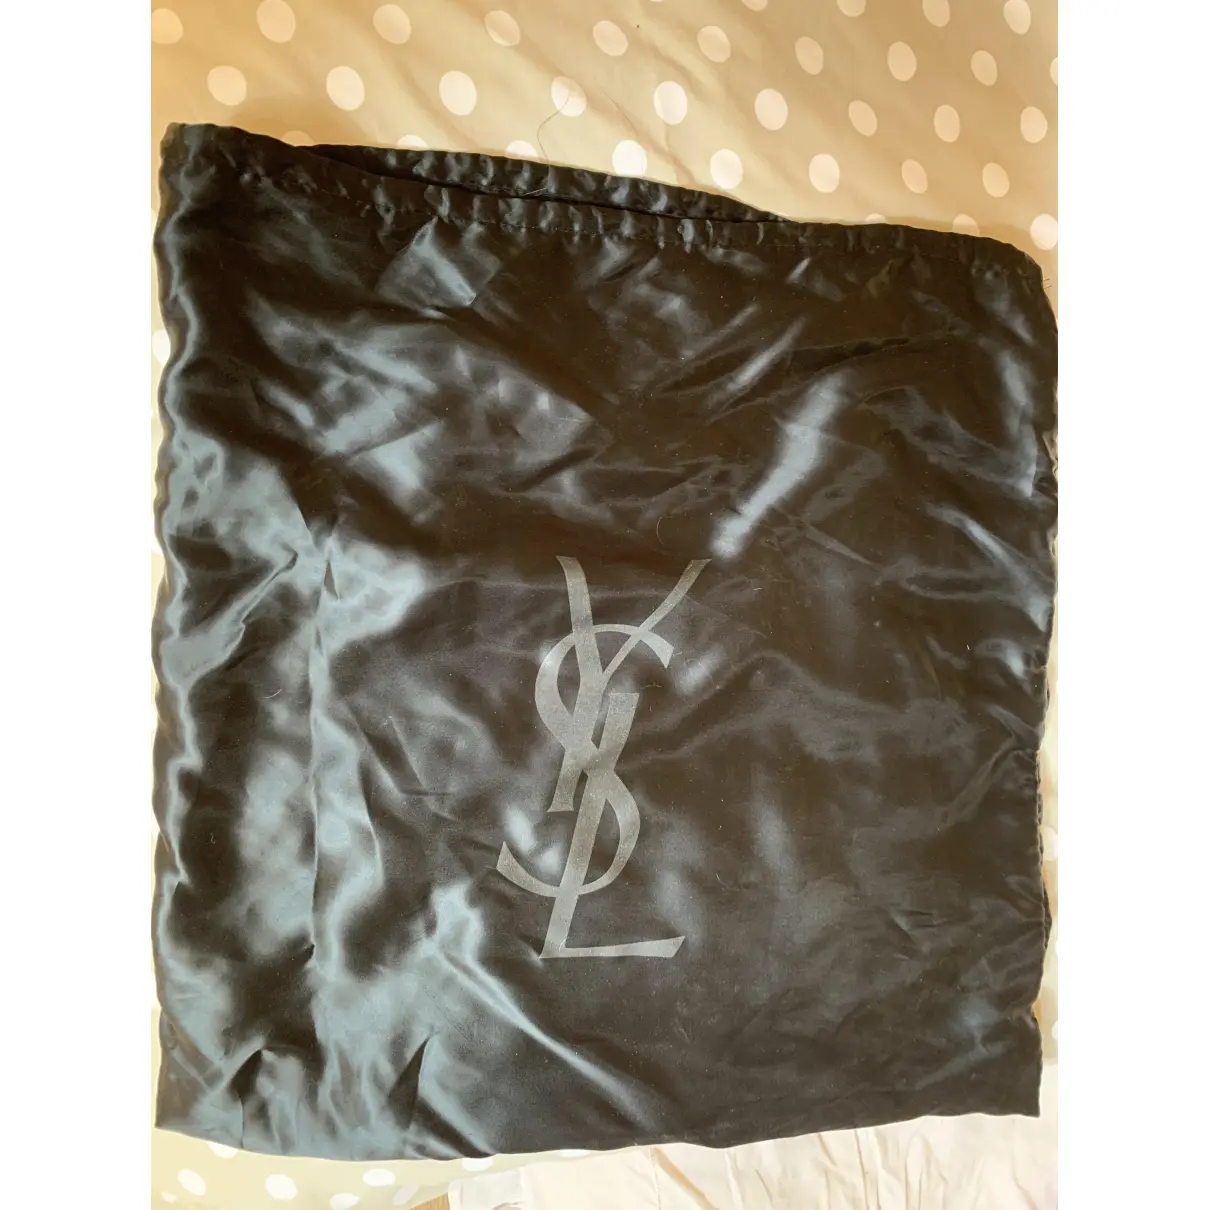 Patent leather handbag Yves Saint Laurent - Vintage